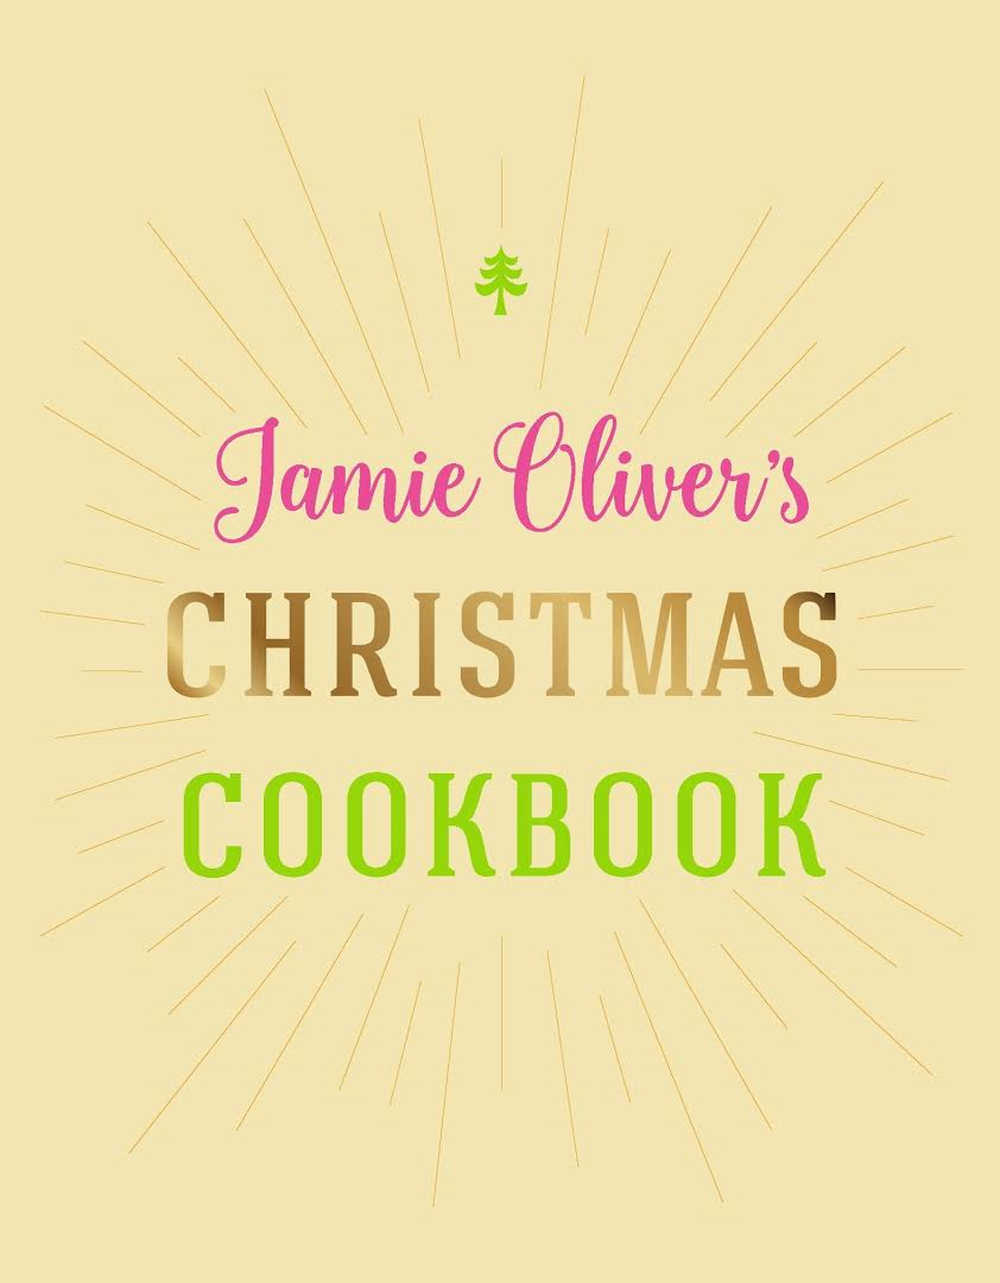 Jamie Oliver’s Christmas Cookbook (easons.ie, €19.99)